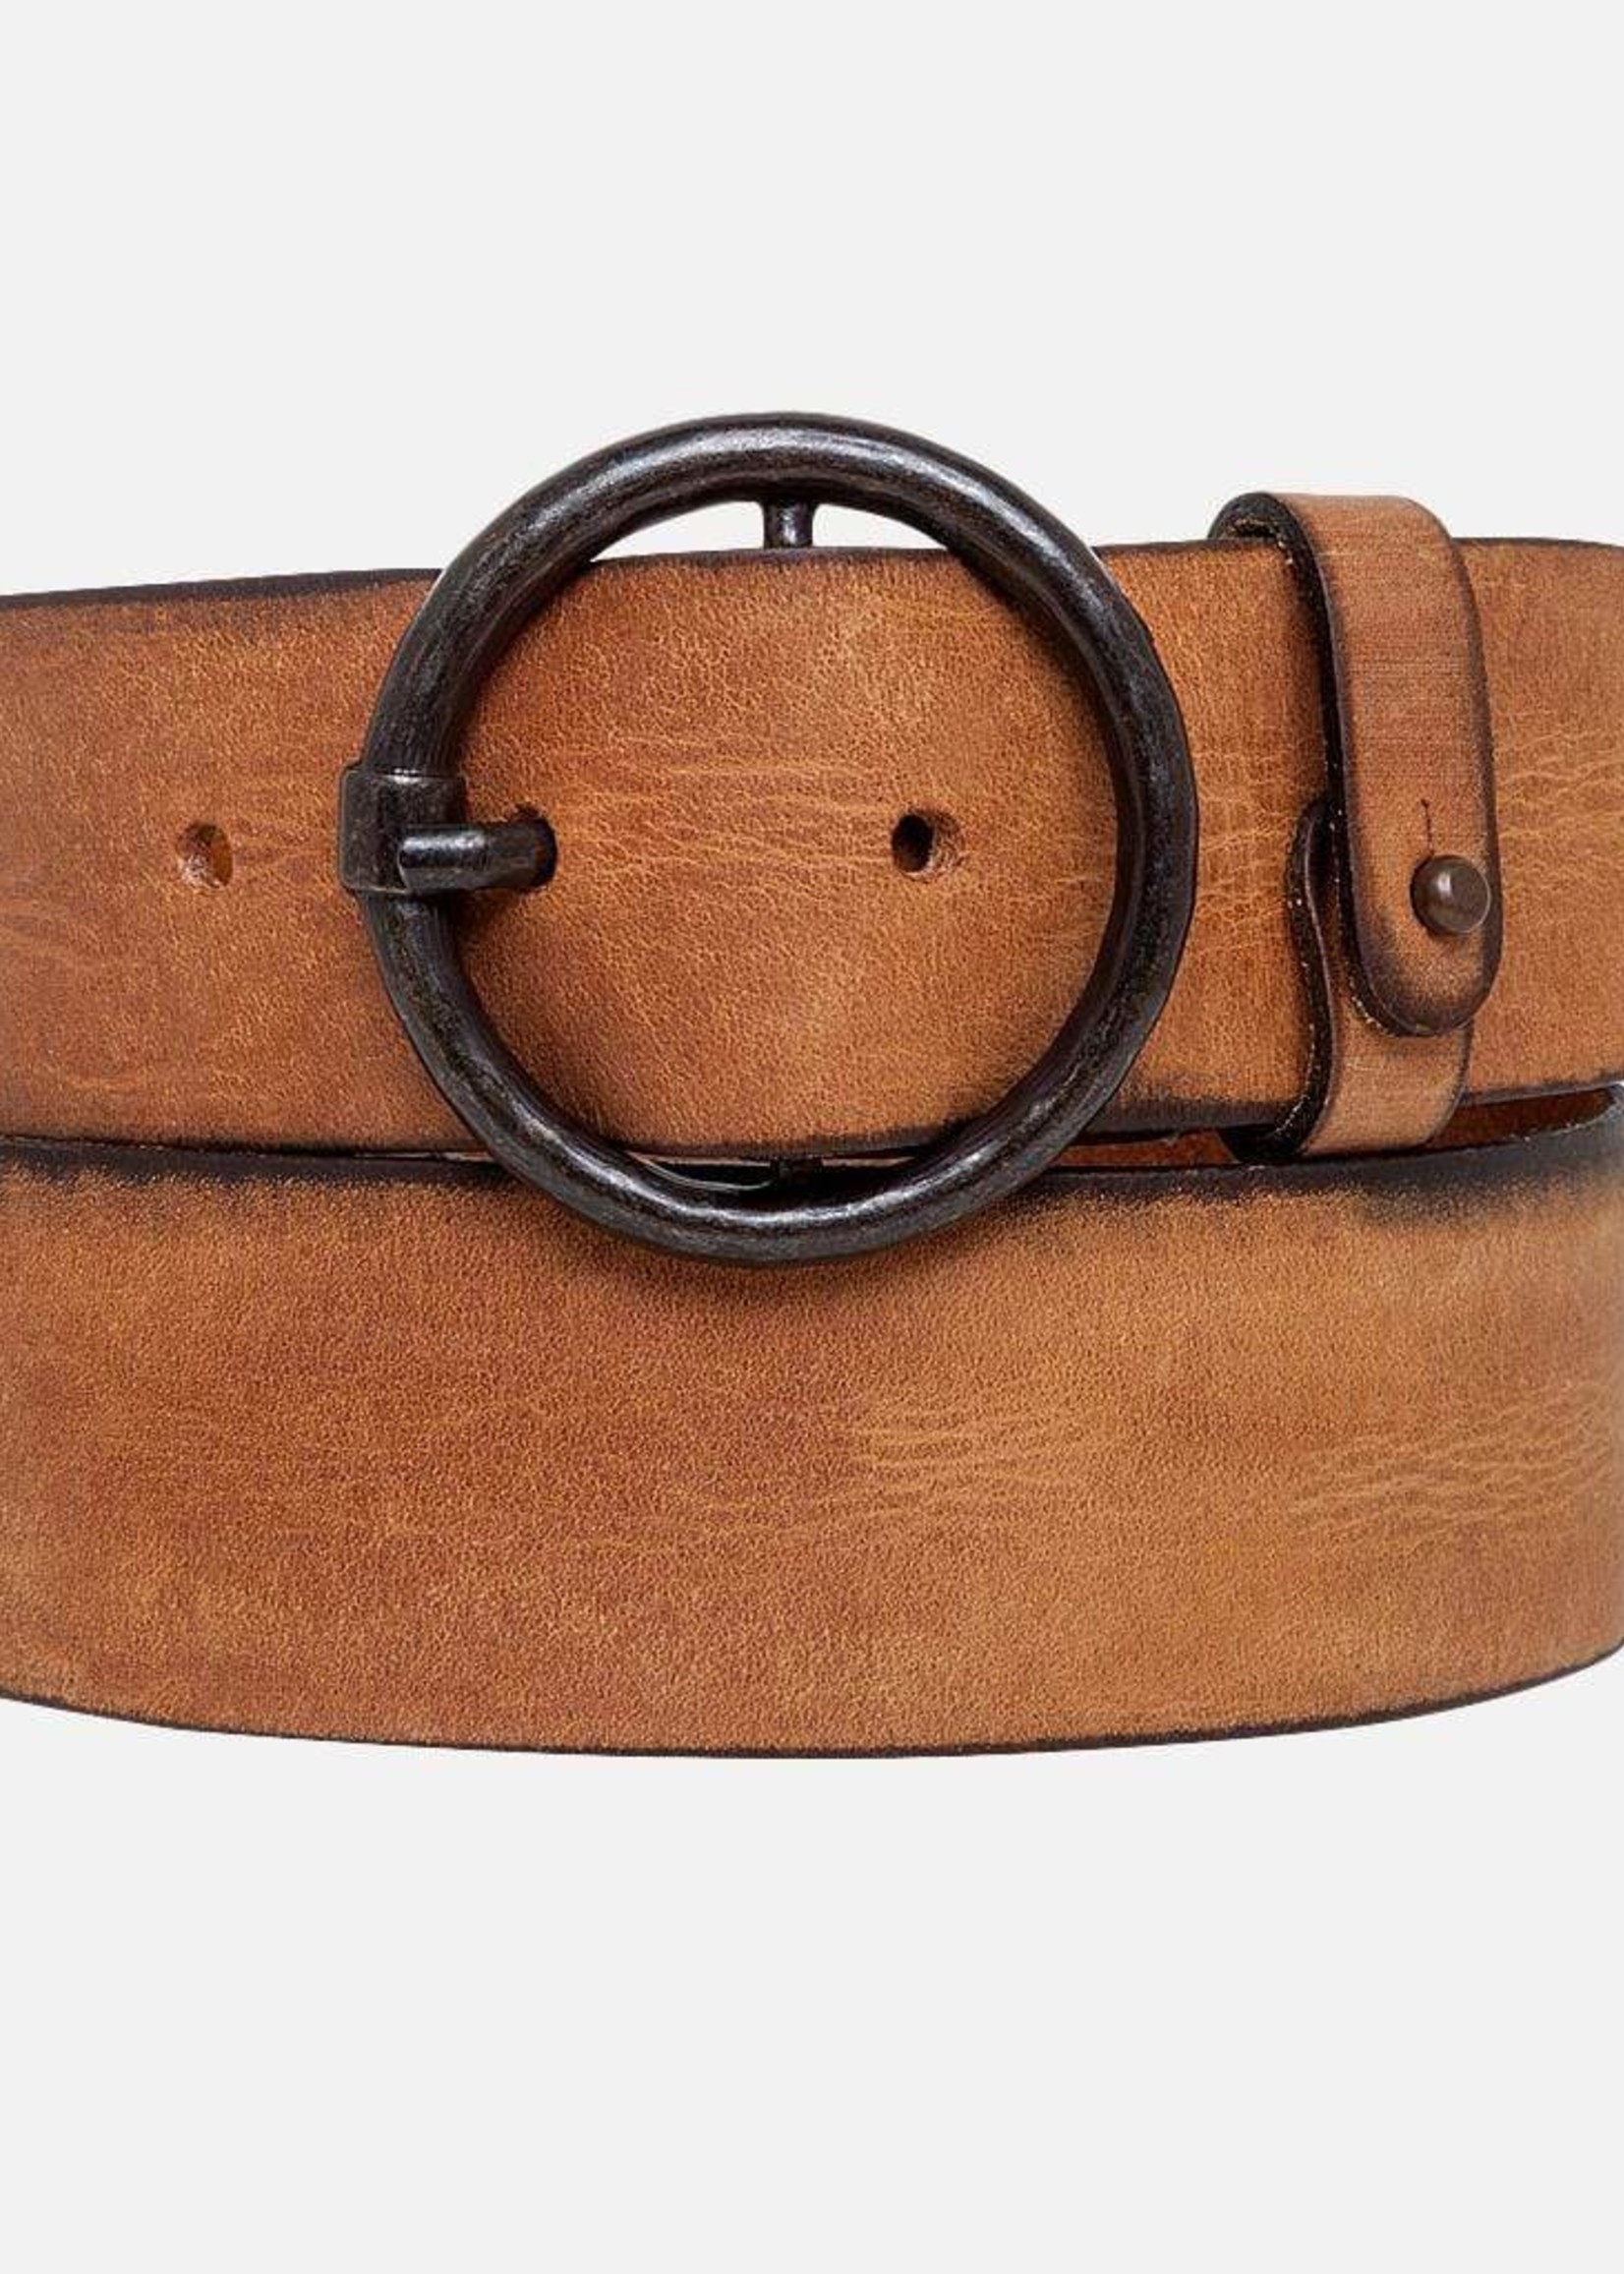 Amsterstdam Heritage Belts &Bags Vintage Round Buckle